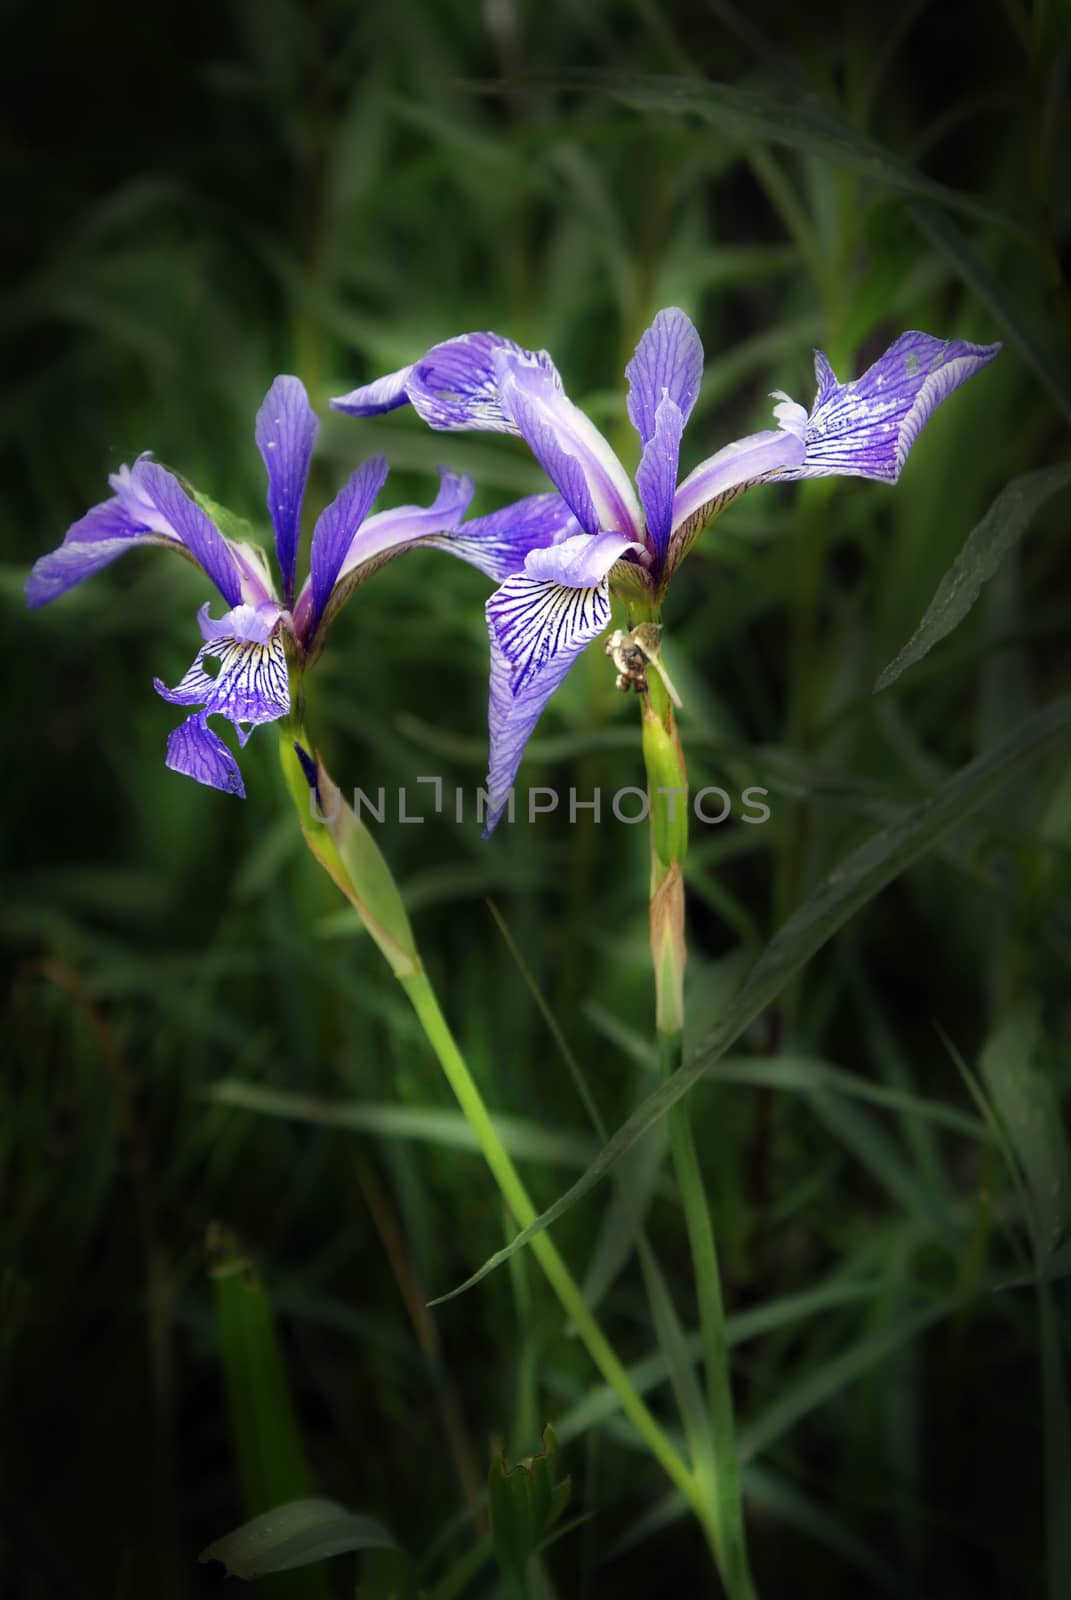 A nice shot of a stylish purple iris flower in a countryside field.